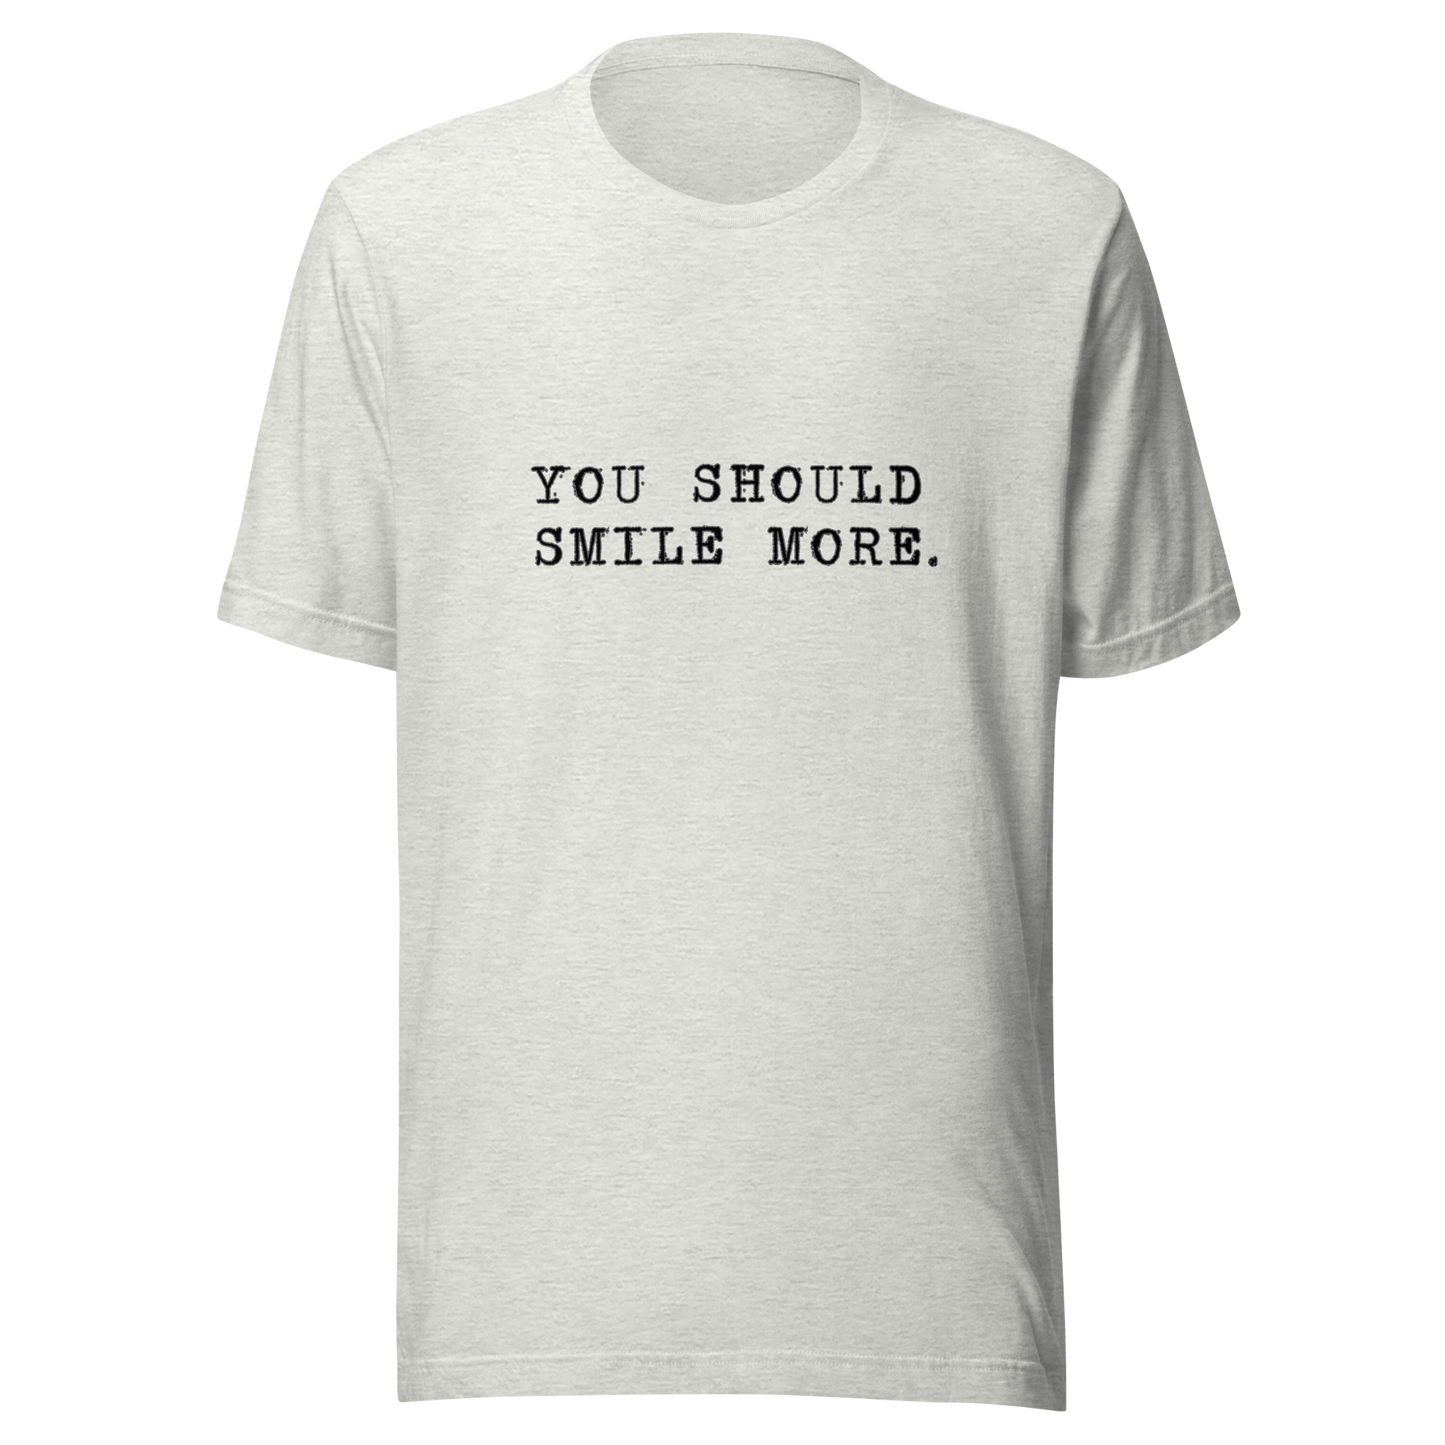 you should smile more. t-shirt in ash - gaslit apparel